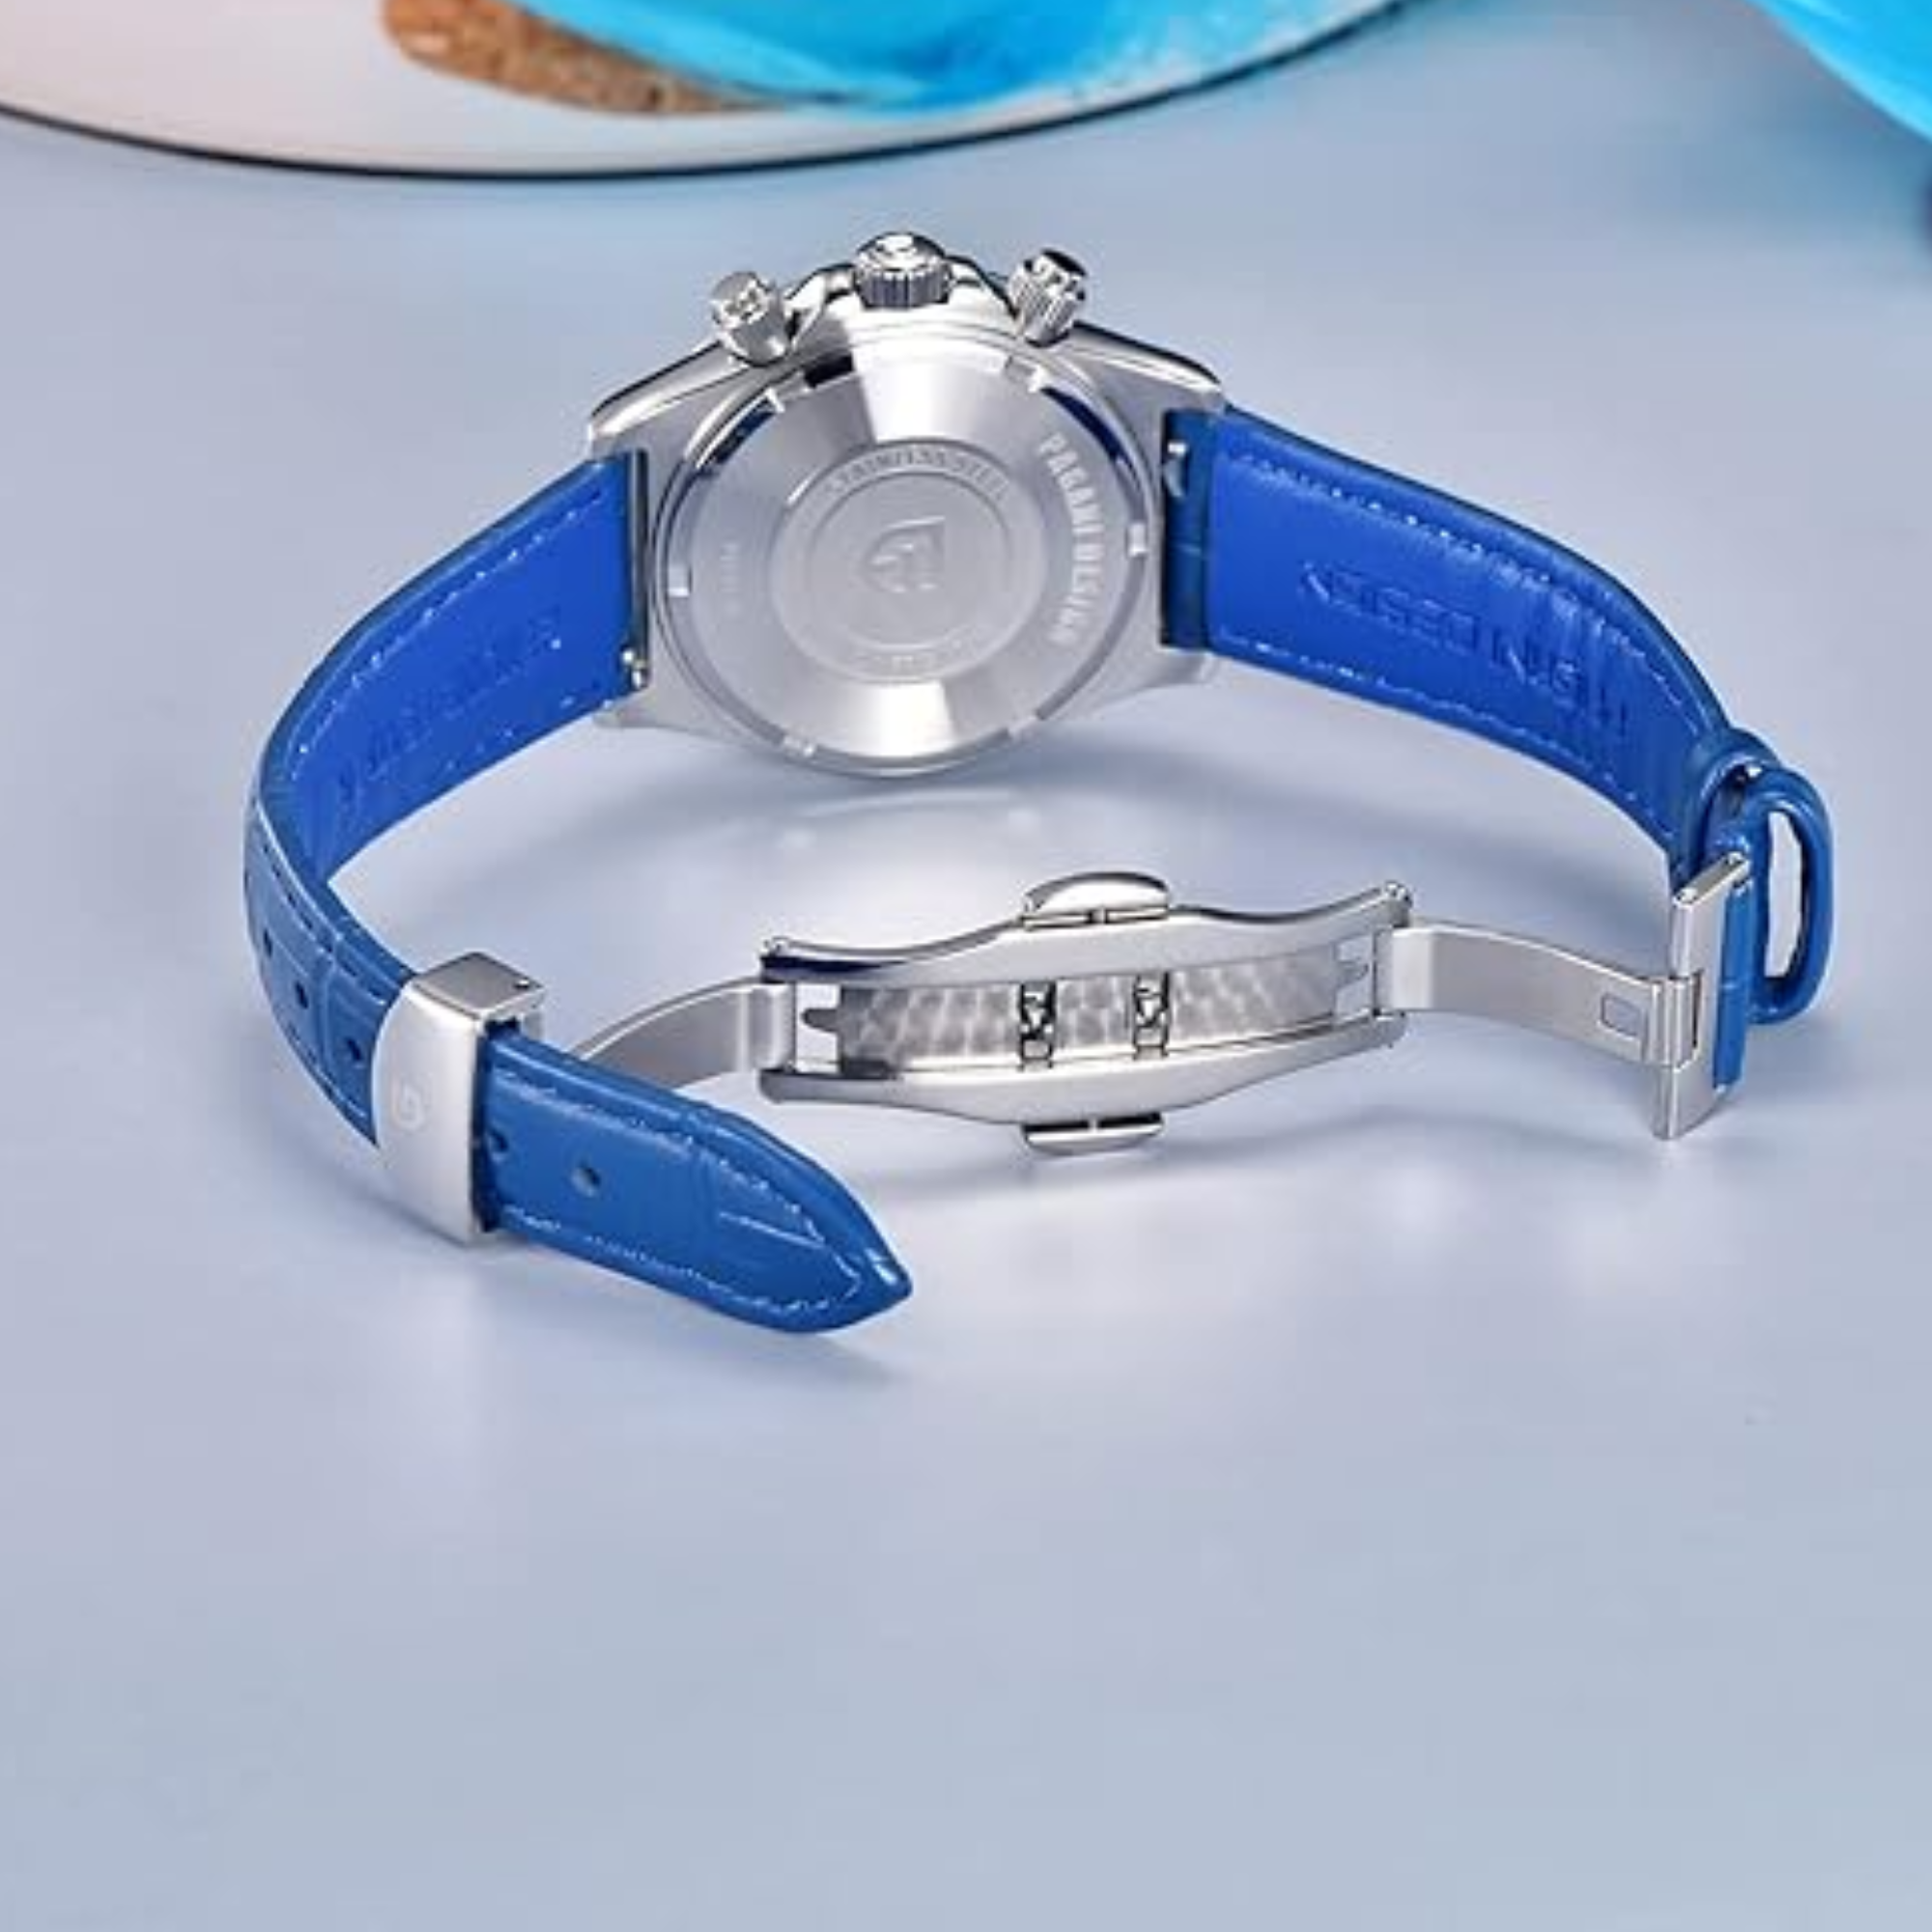 Pagani Design PD1730 Chronograph Date Quartz women's Watch - White Dial with Blue Strap